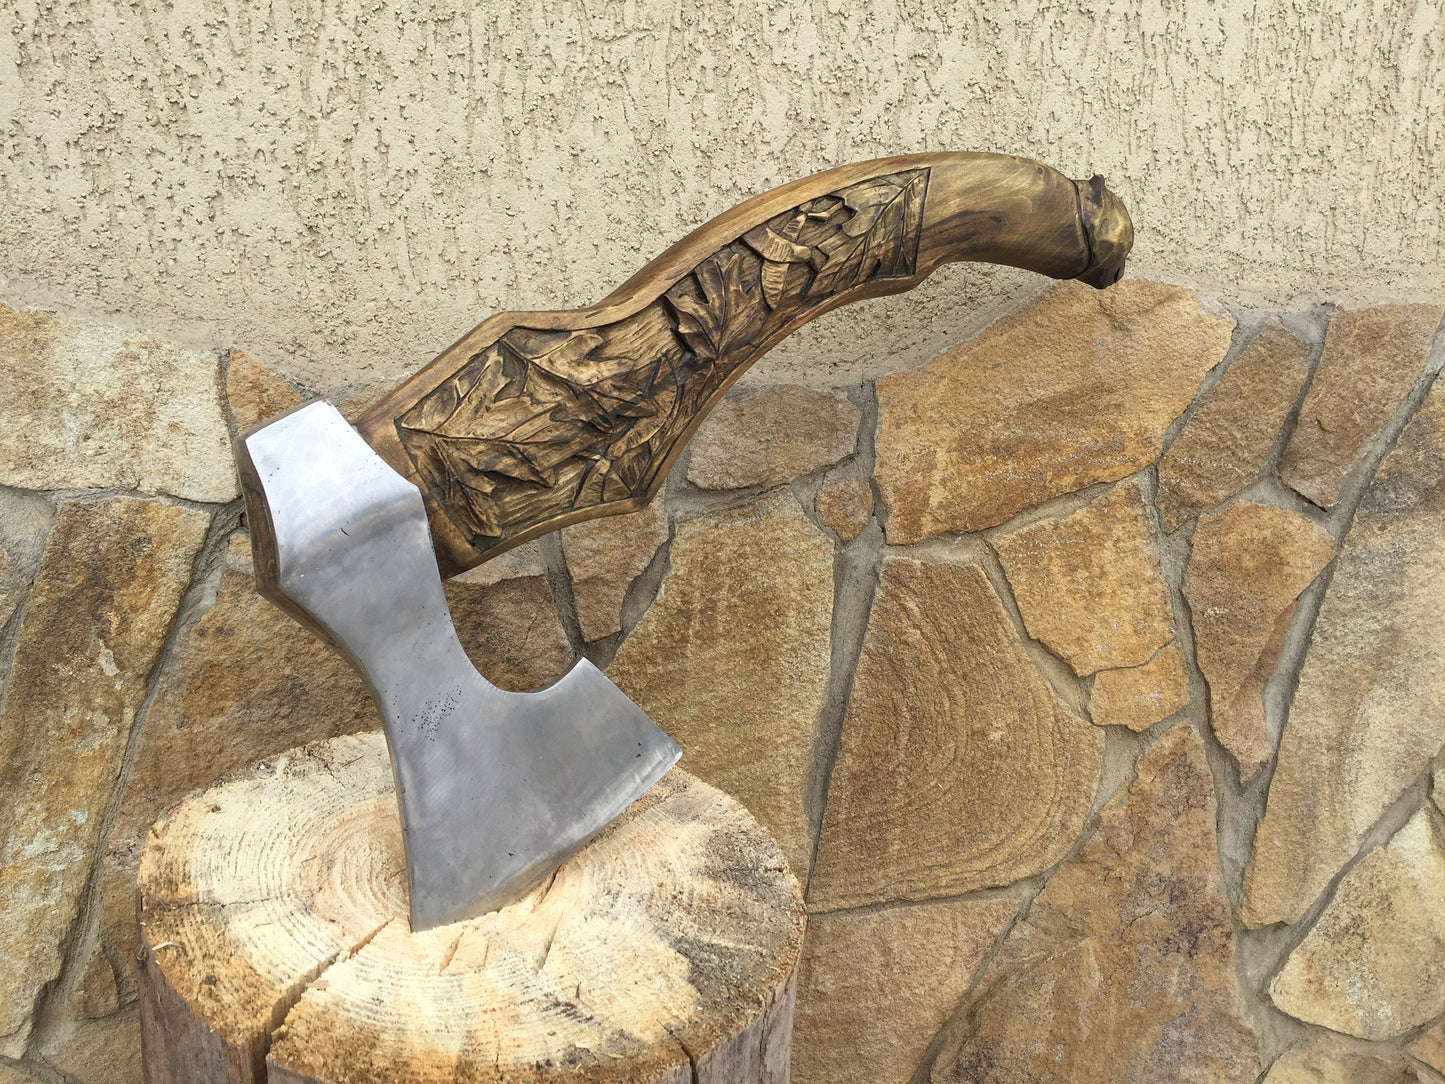 Axe gift, viking axe, tomahawk, viking hatchet, groomsman axe gift, fathers axe gift, carving axe tool, wildlife axe tool, survival gear